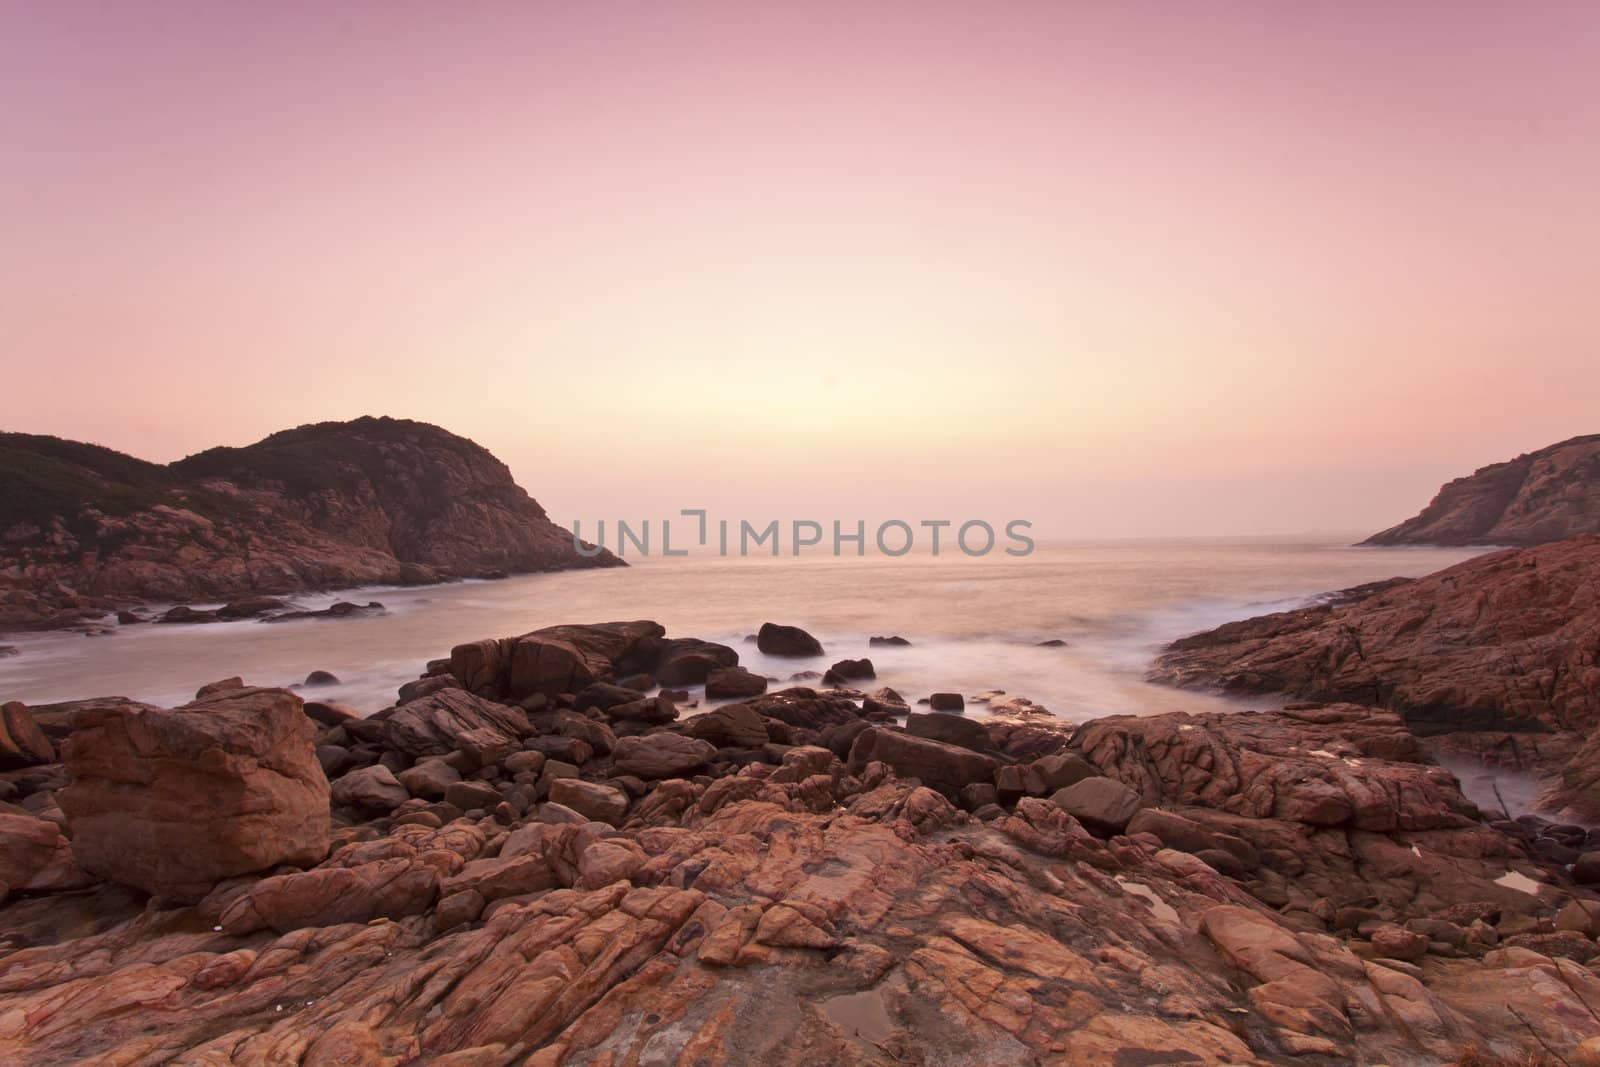 Sea stones along the coast at sunrise by kawing921